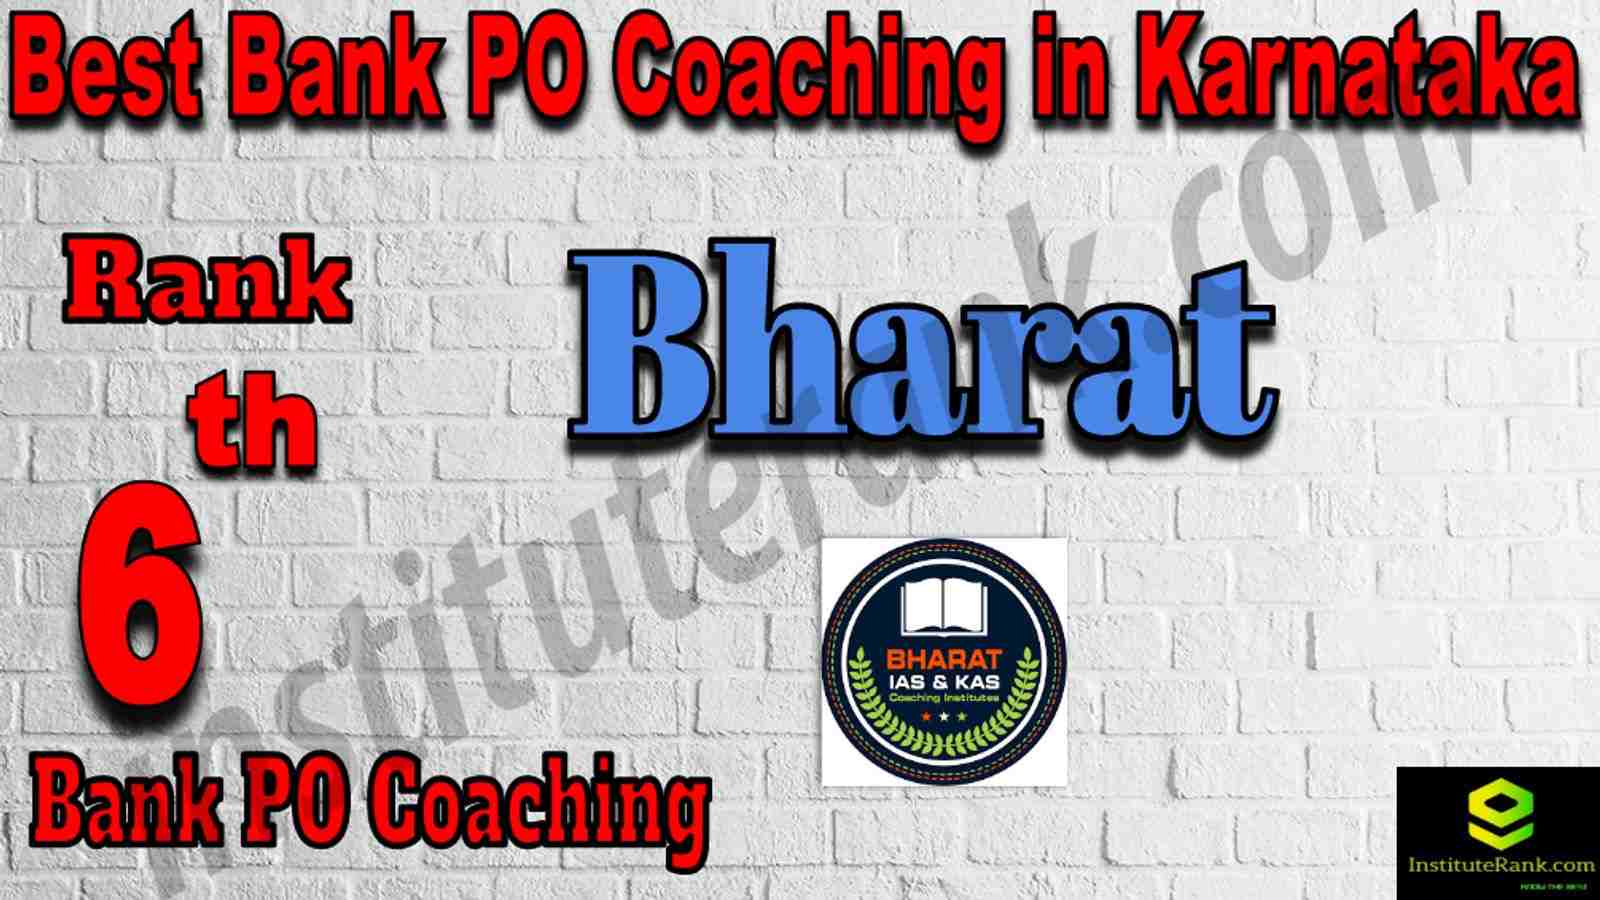 6th Best Bank PO Coaching in Karnataka